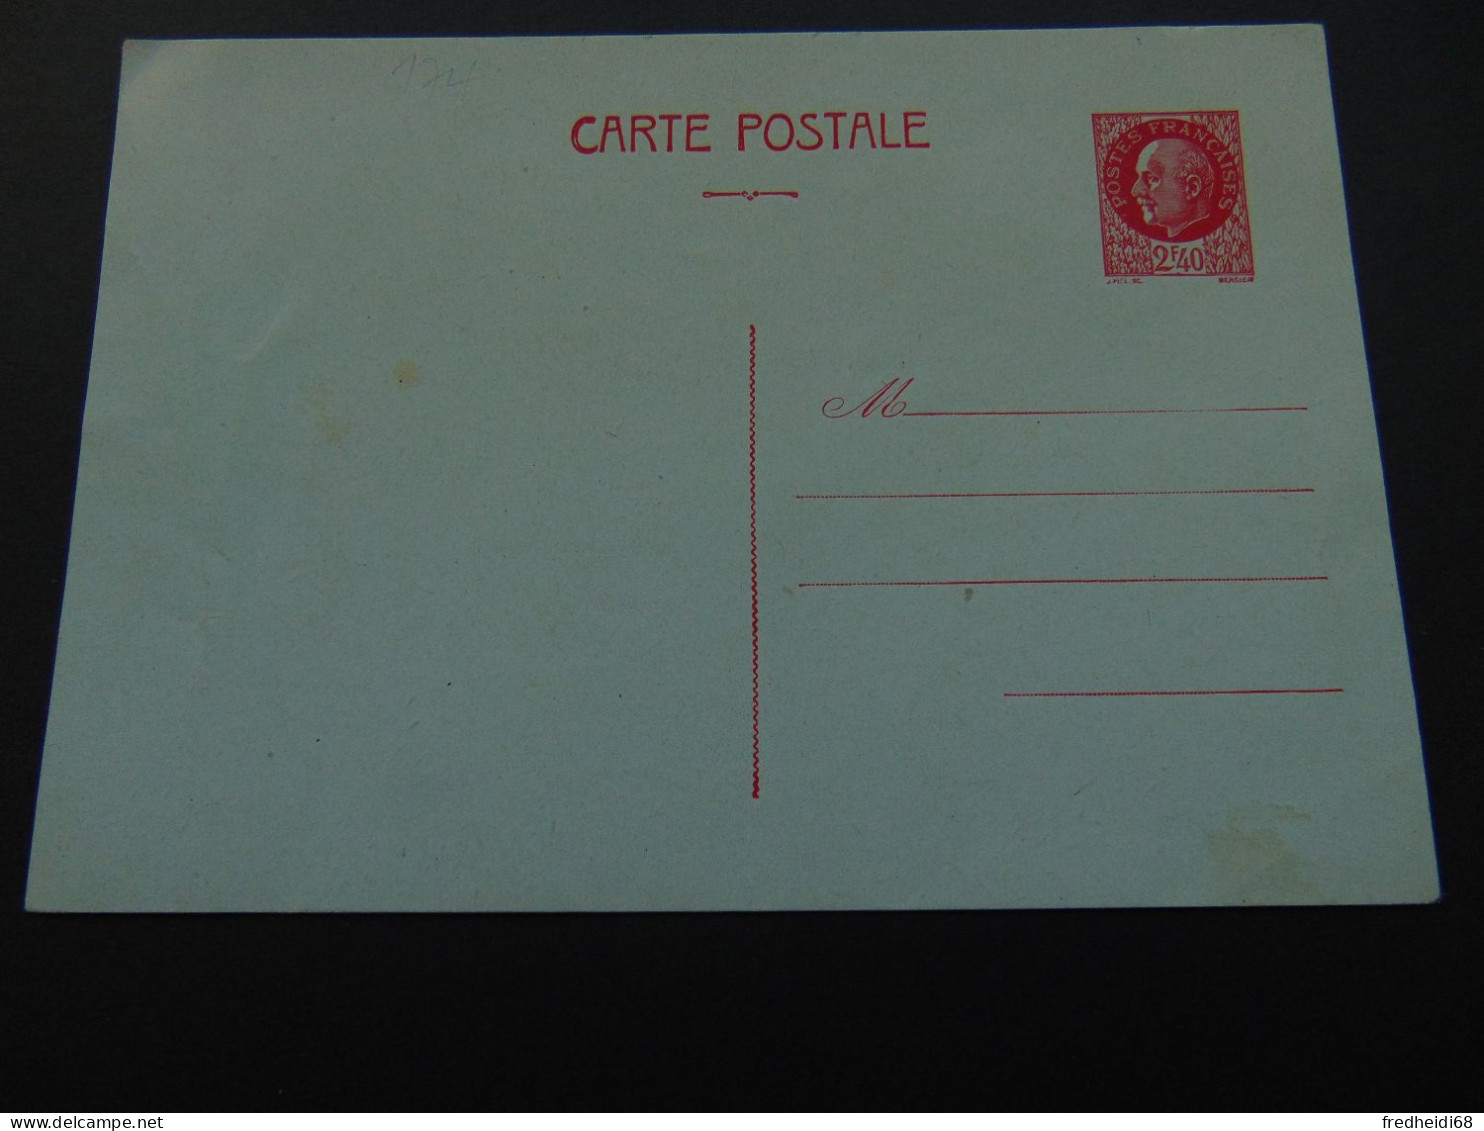 Carte Postale Au Type Pétain à 2,40 Francs N°. H1 (Storch) Neuve - Standard Postcards & Stamped On Demand (before 1995)